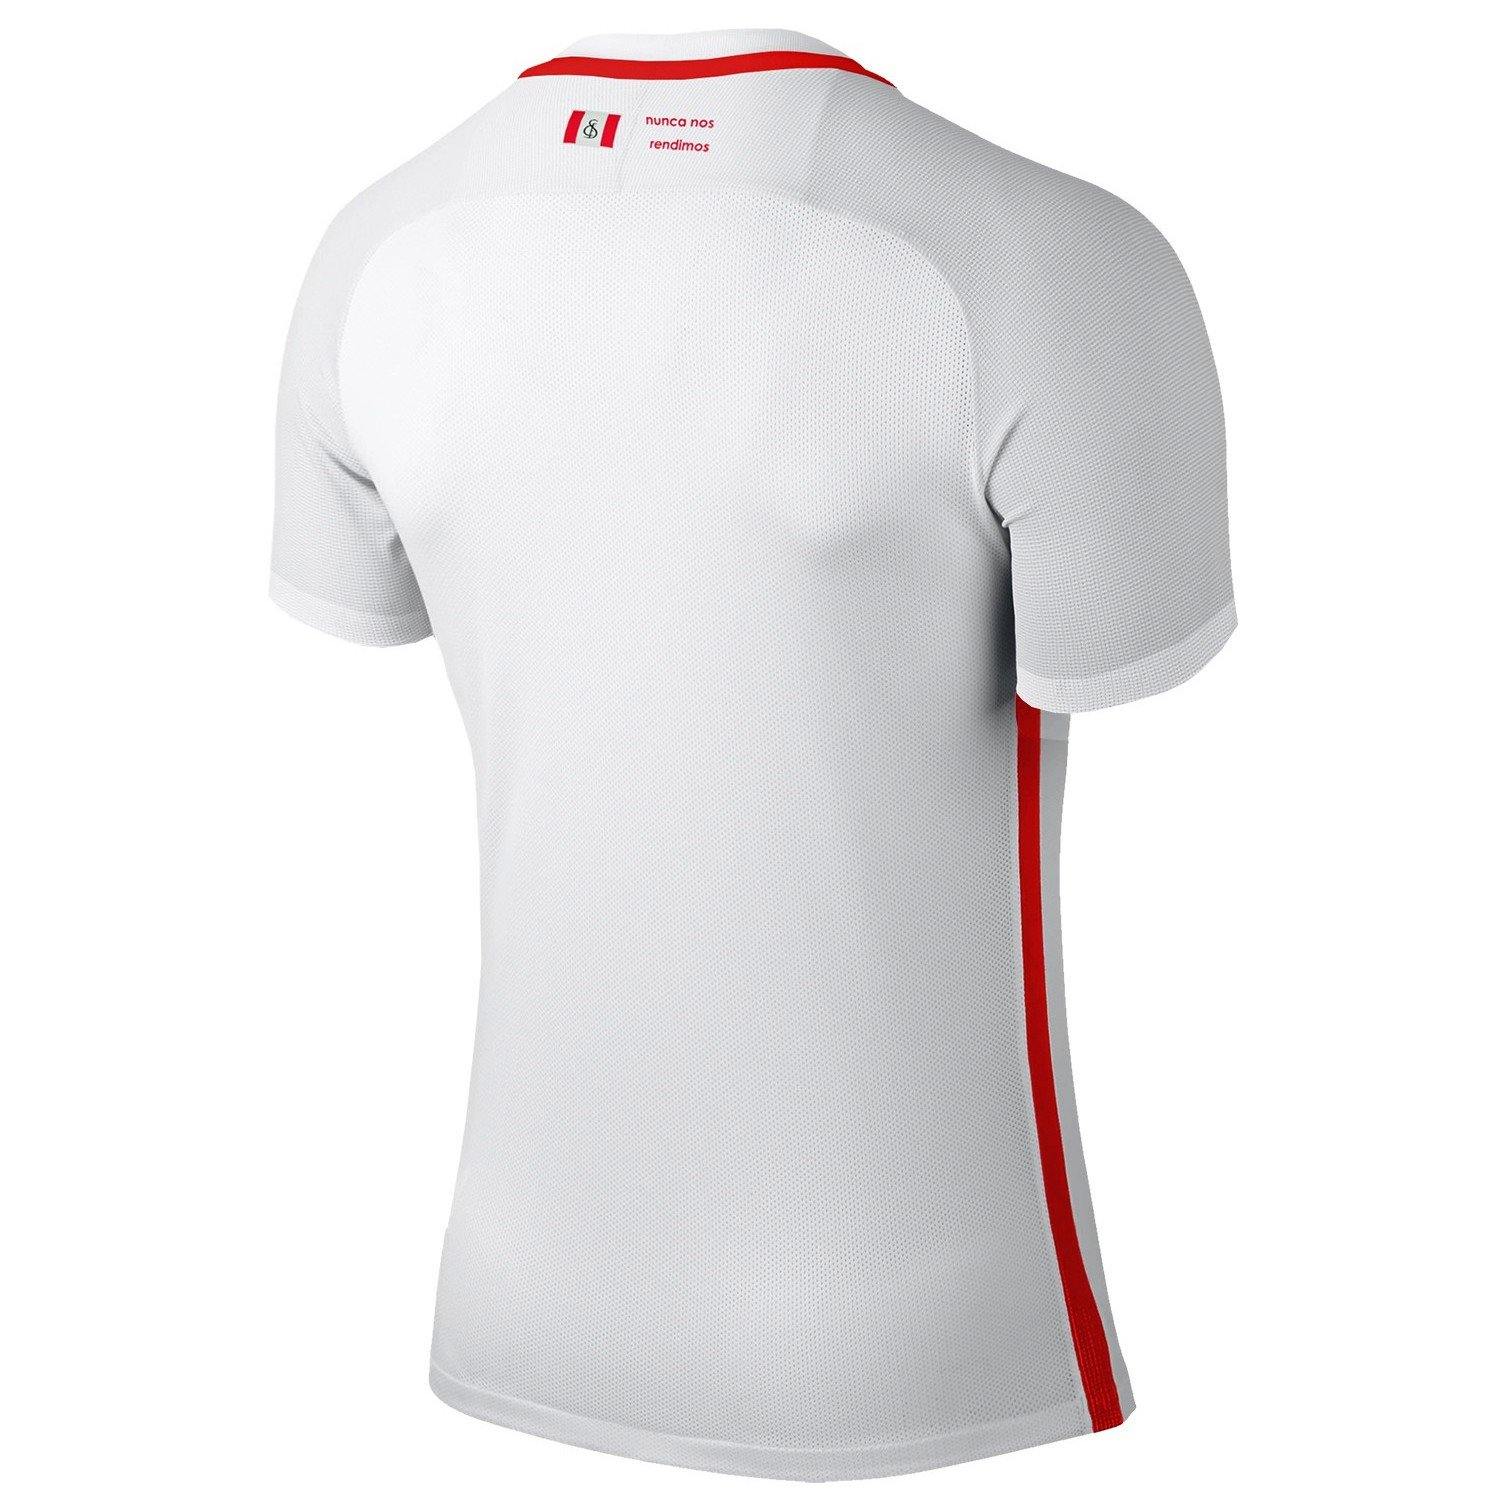 Becks Complaciente Torrente Sevilla FC Home soccer jersey 2018/19 - Nike – SoccerTracksuits.com